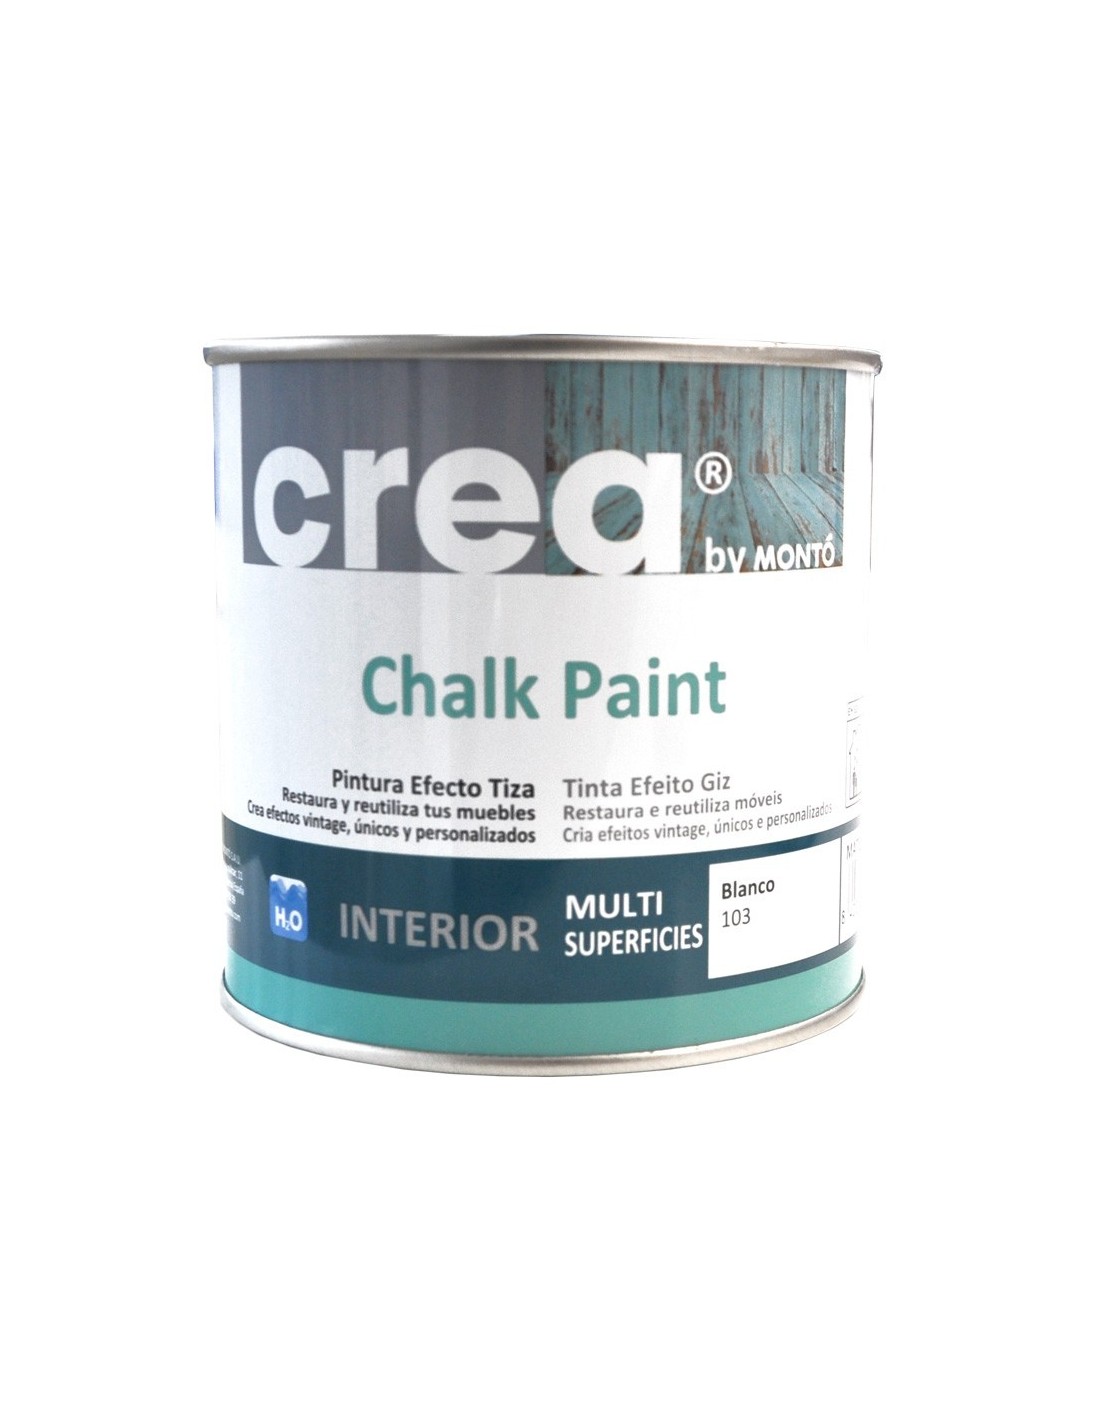 Pintura efecto tiza: Crea Chalk Paint – Ecommerce Tiendas Montó